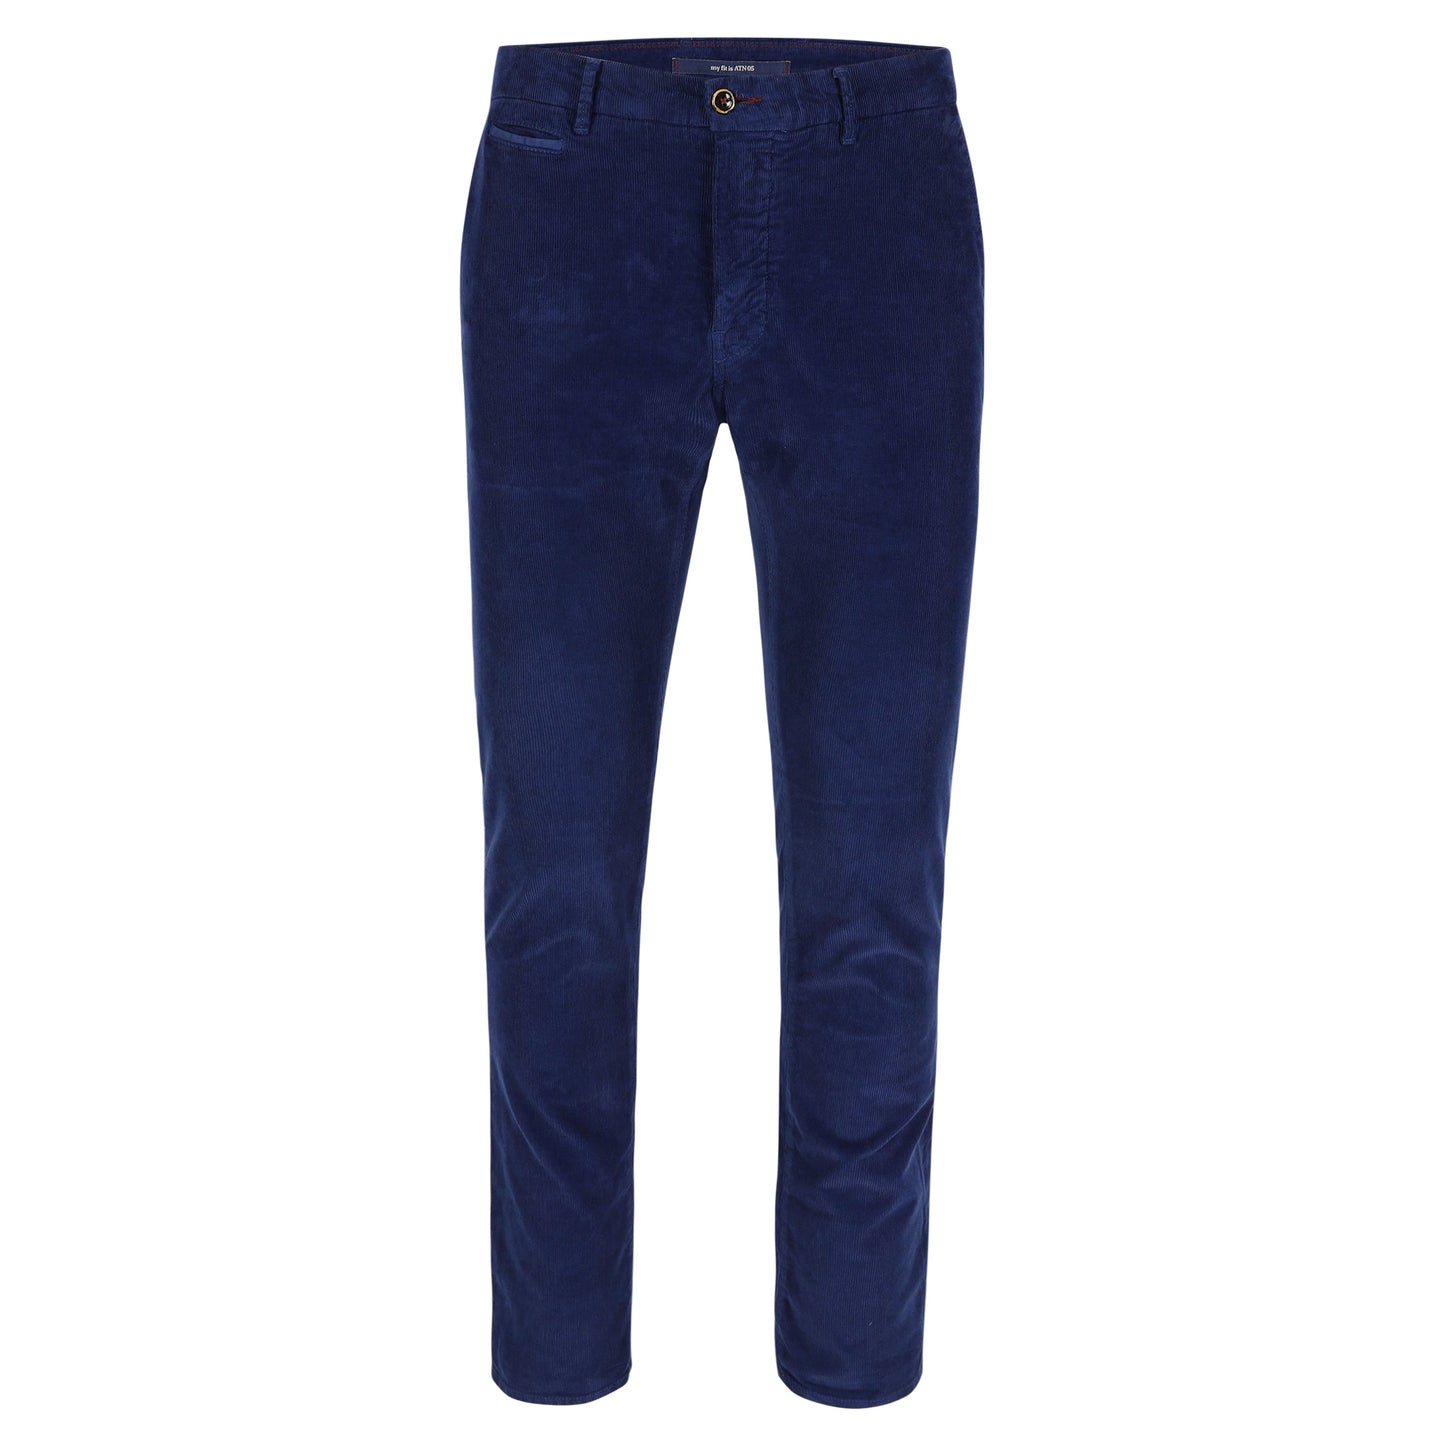 Blue corduroy slim fit trousers Atelier Noterman - 1585/220